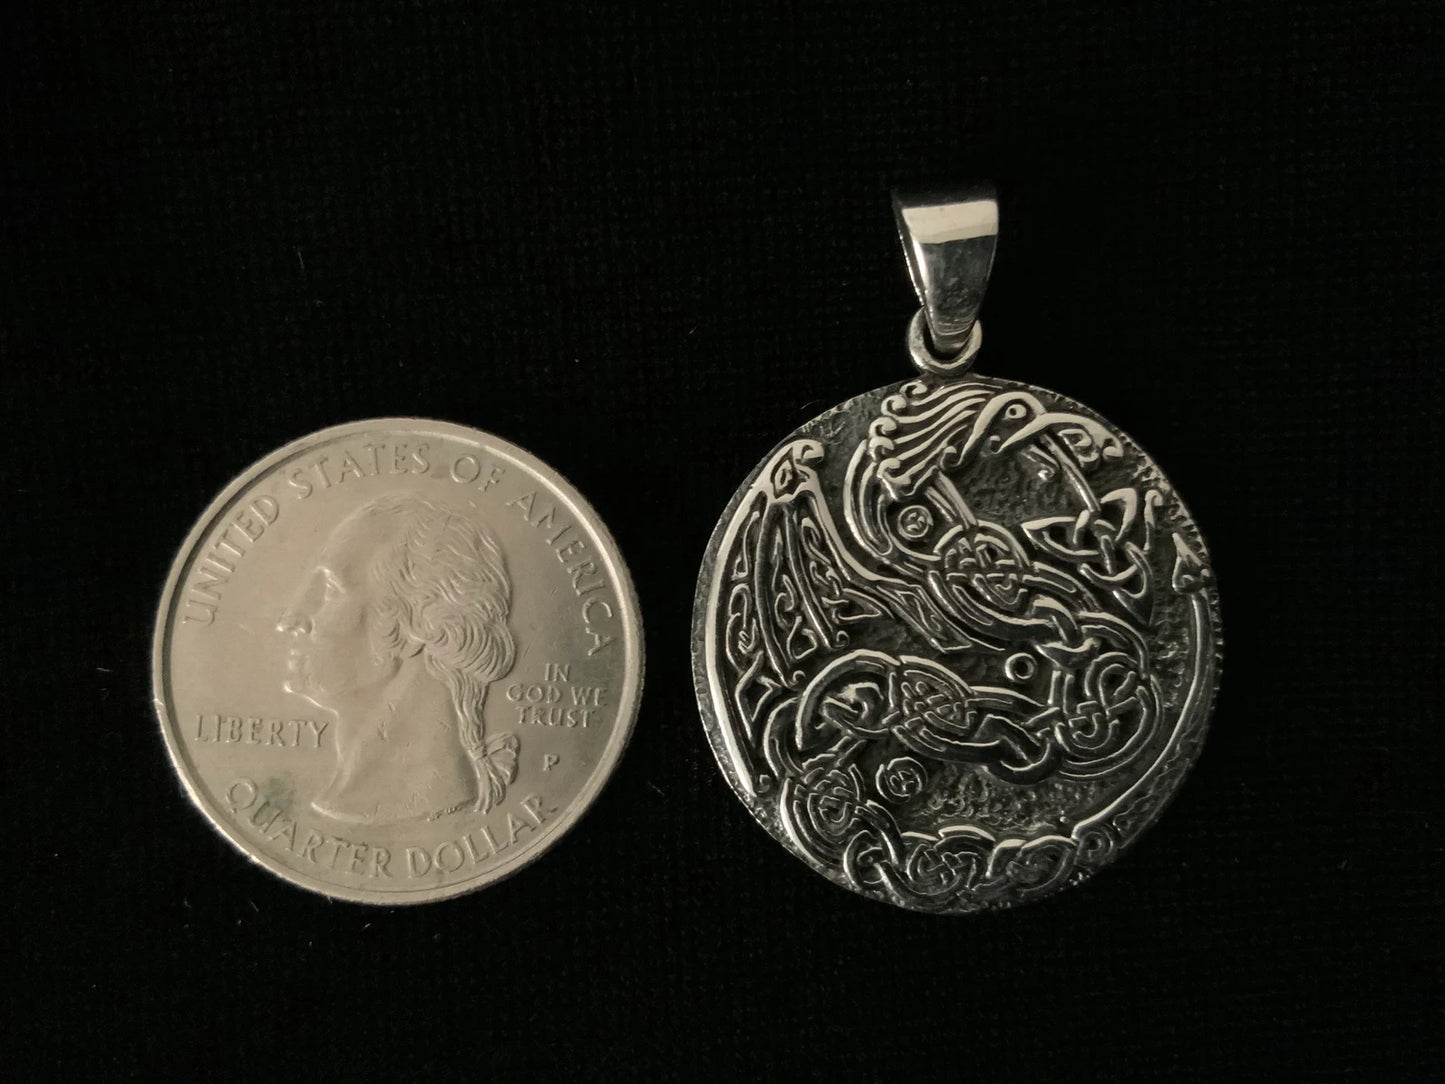 Large 925 Sterling Silver Celtic Dragon Necklace